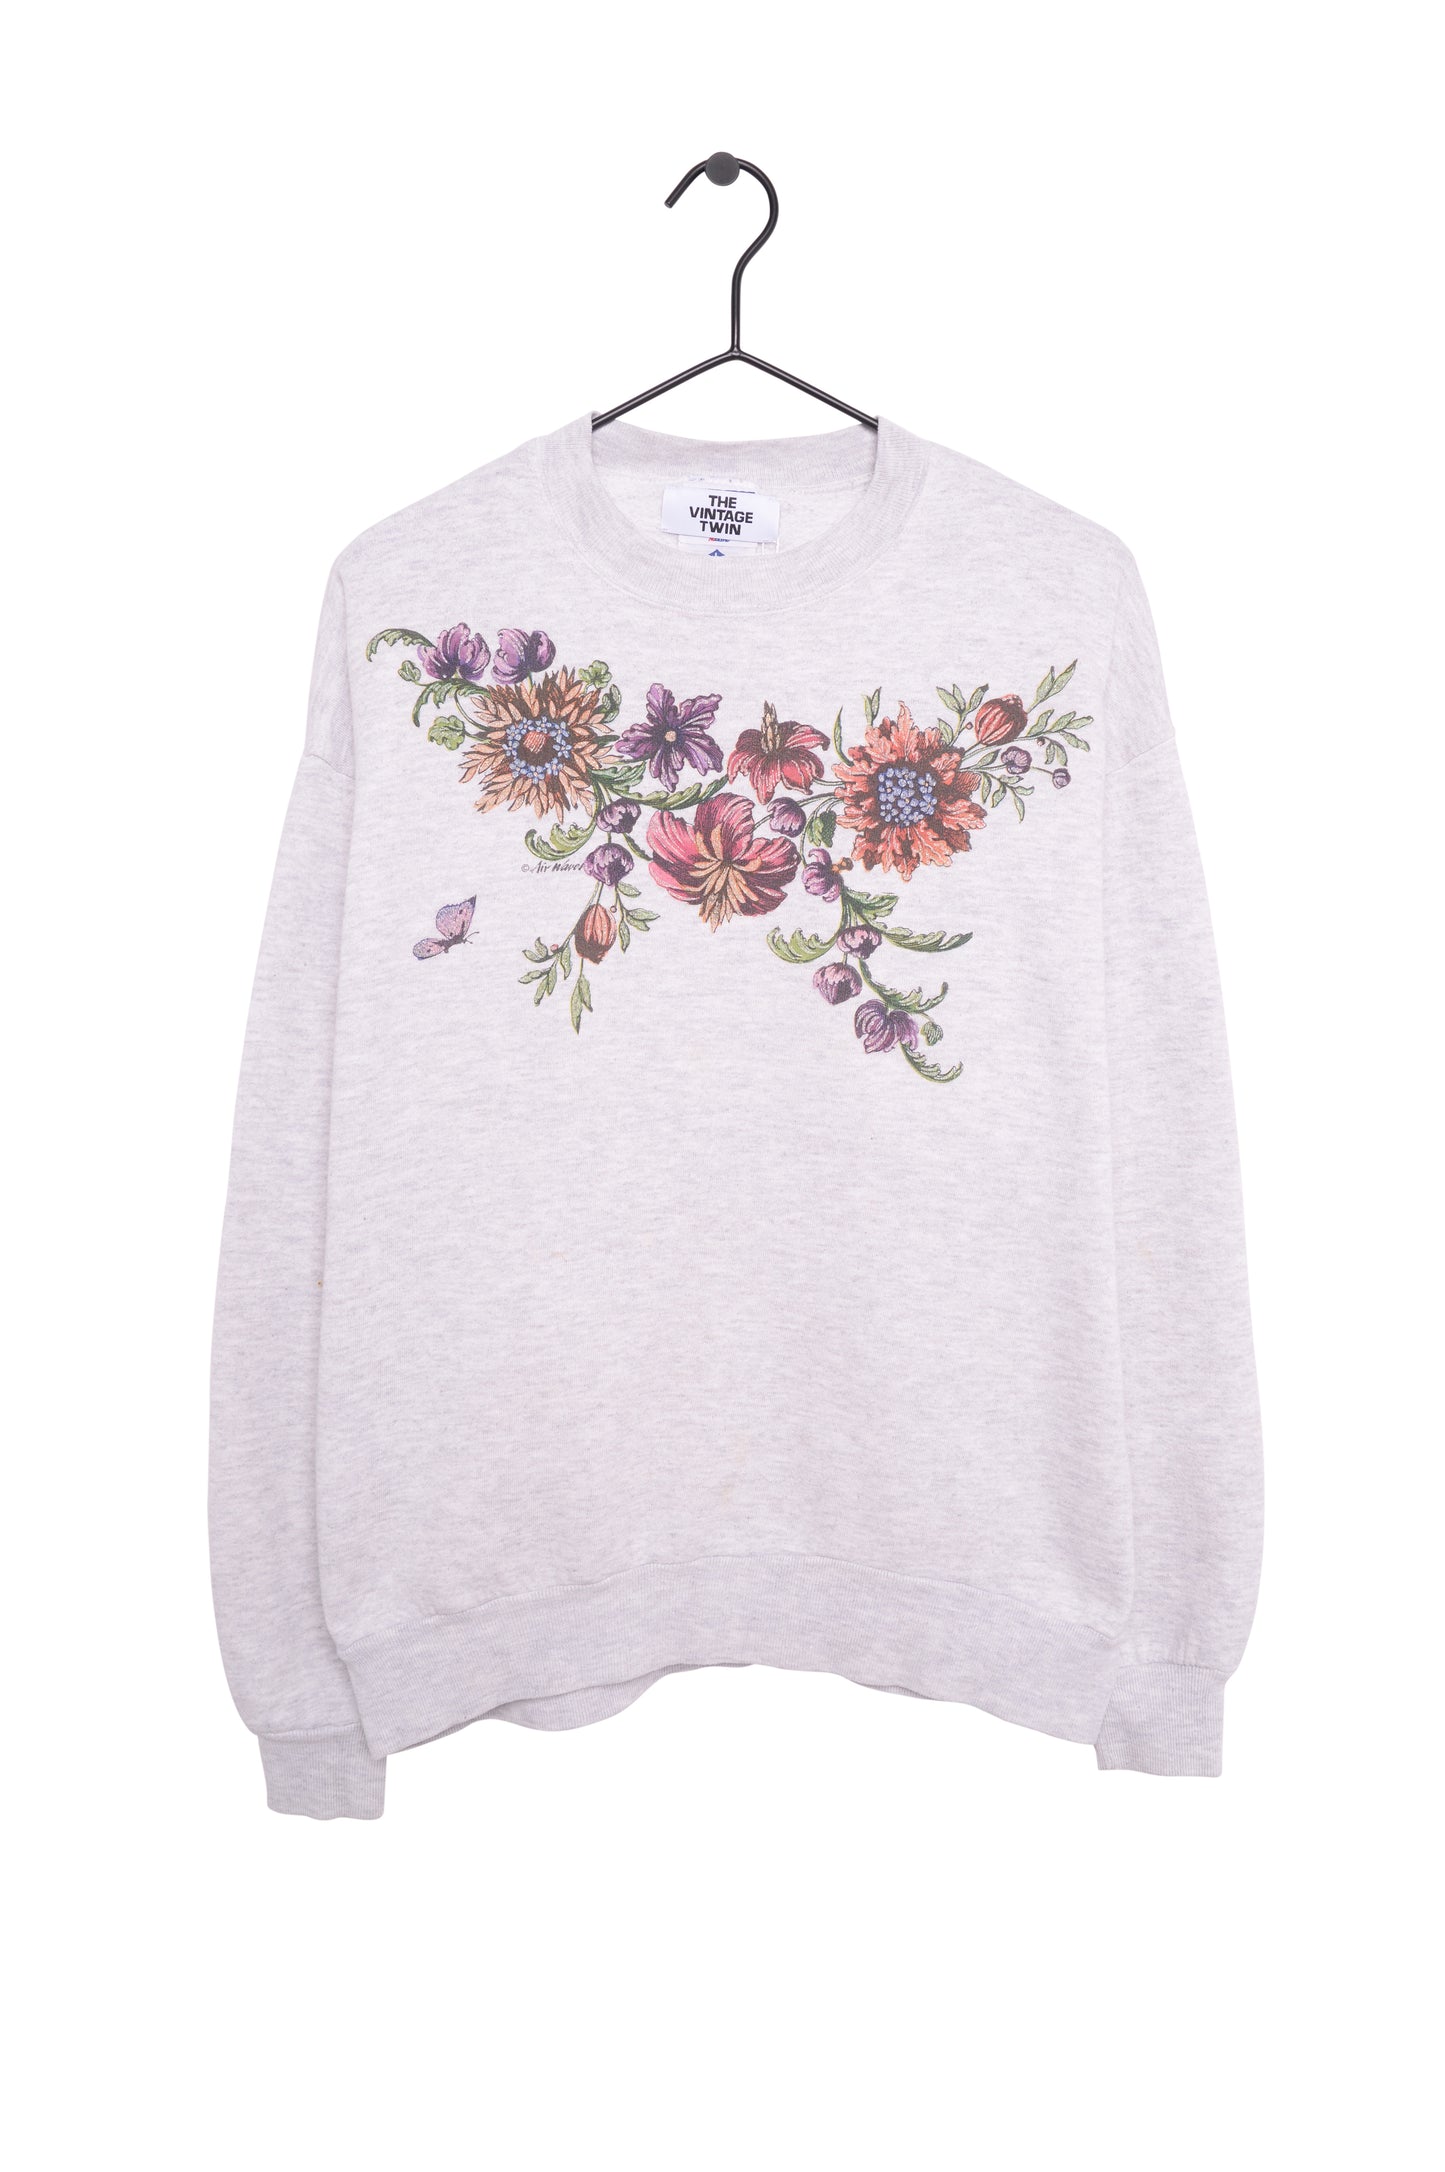 1990s Glitter Flowers Sweatshirt USA